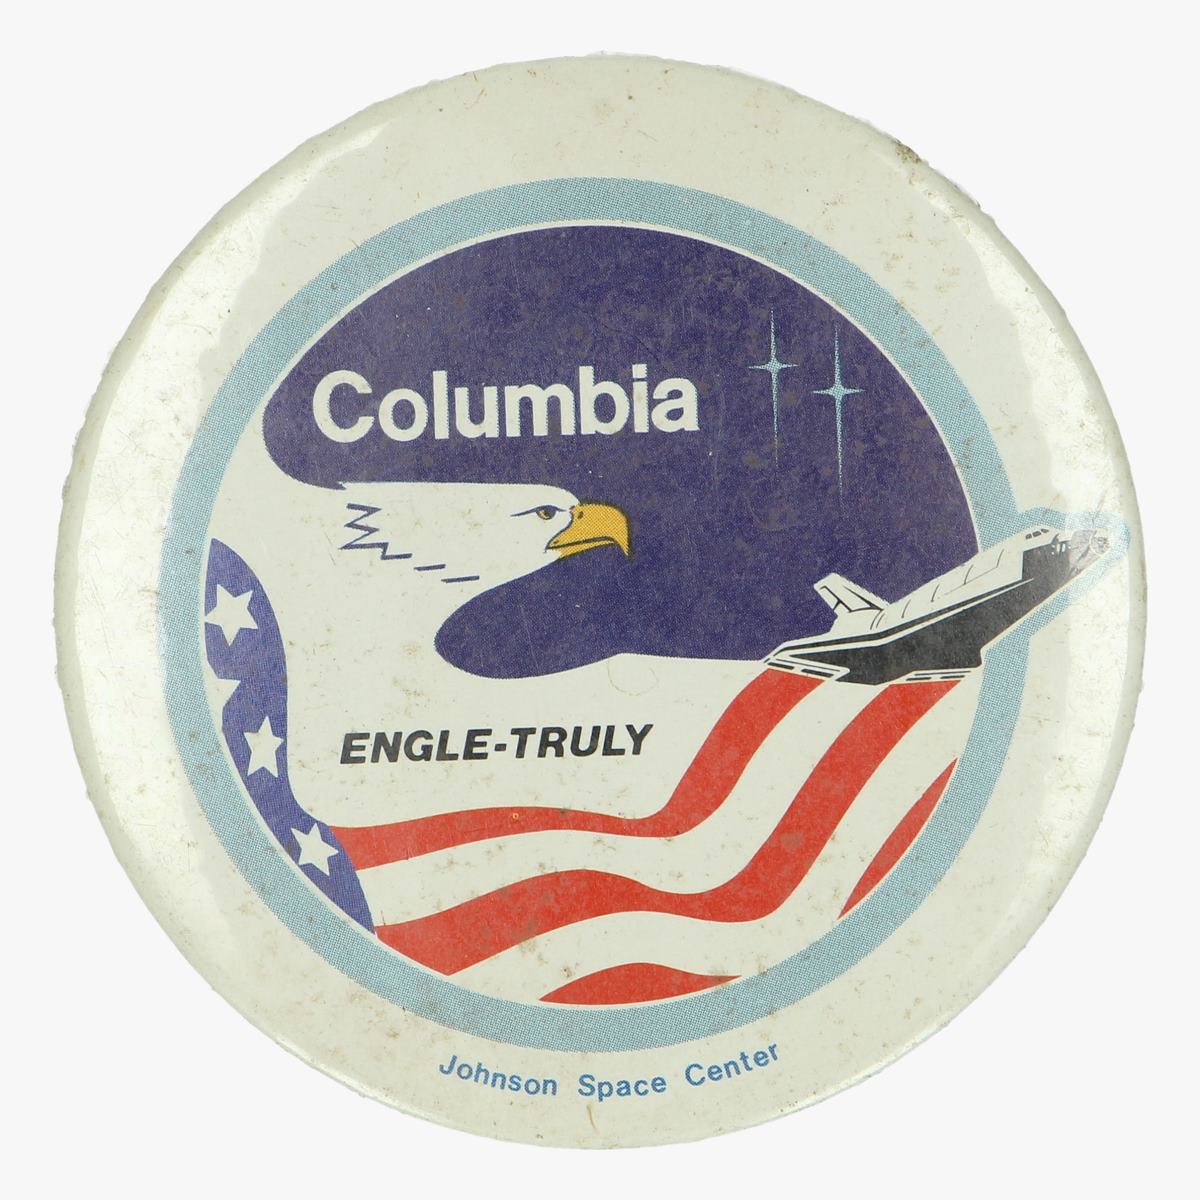 Afbeeldingen van button pins columbia engle-truly Johnson space center 1981